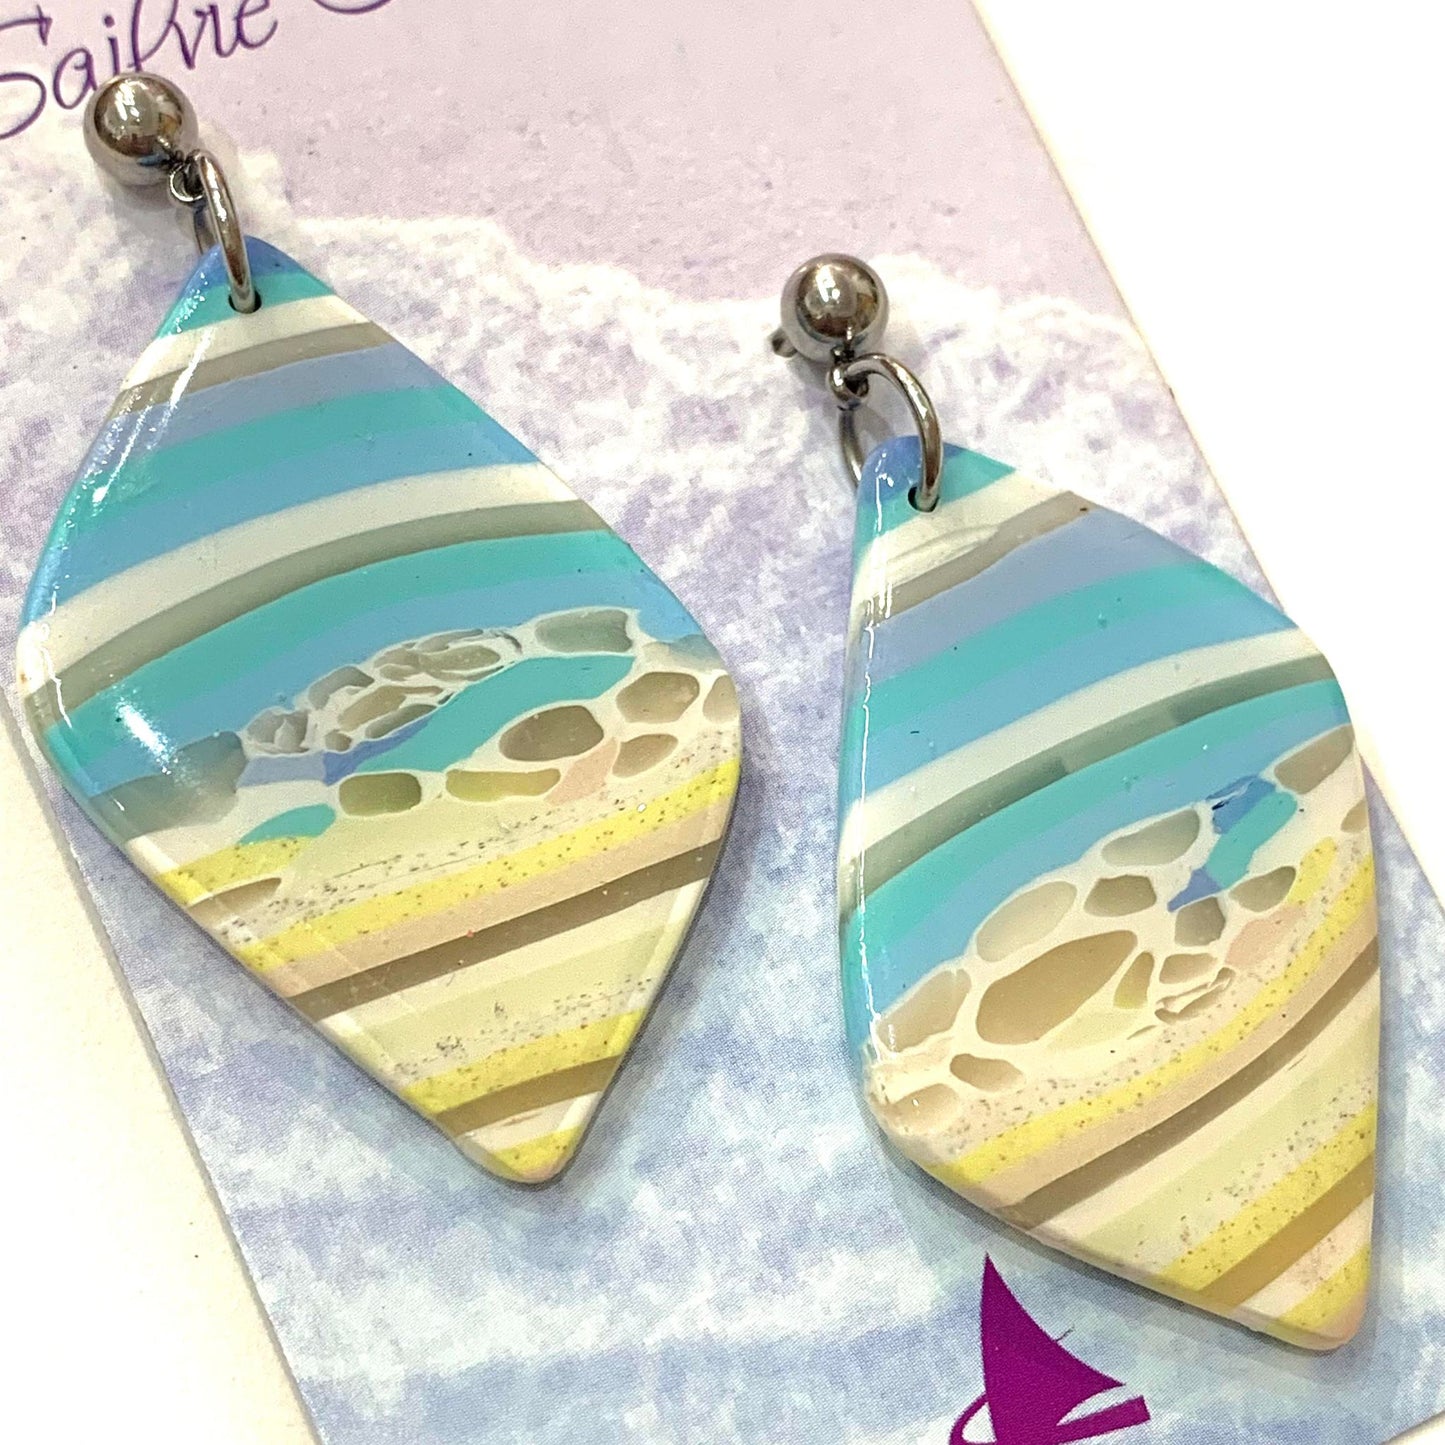 Sailvie Creations - Diamond Beachy Ball Stud Dangle Earrings